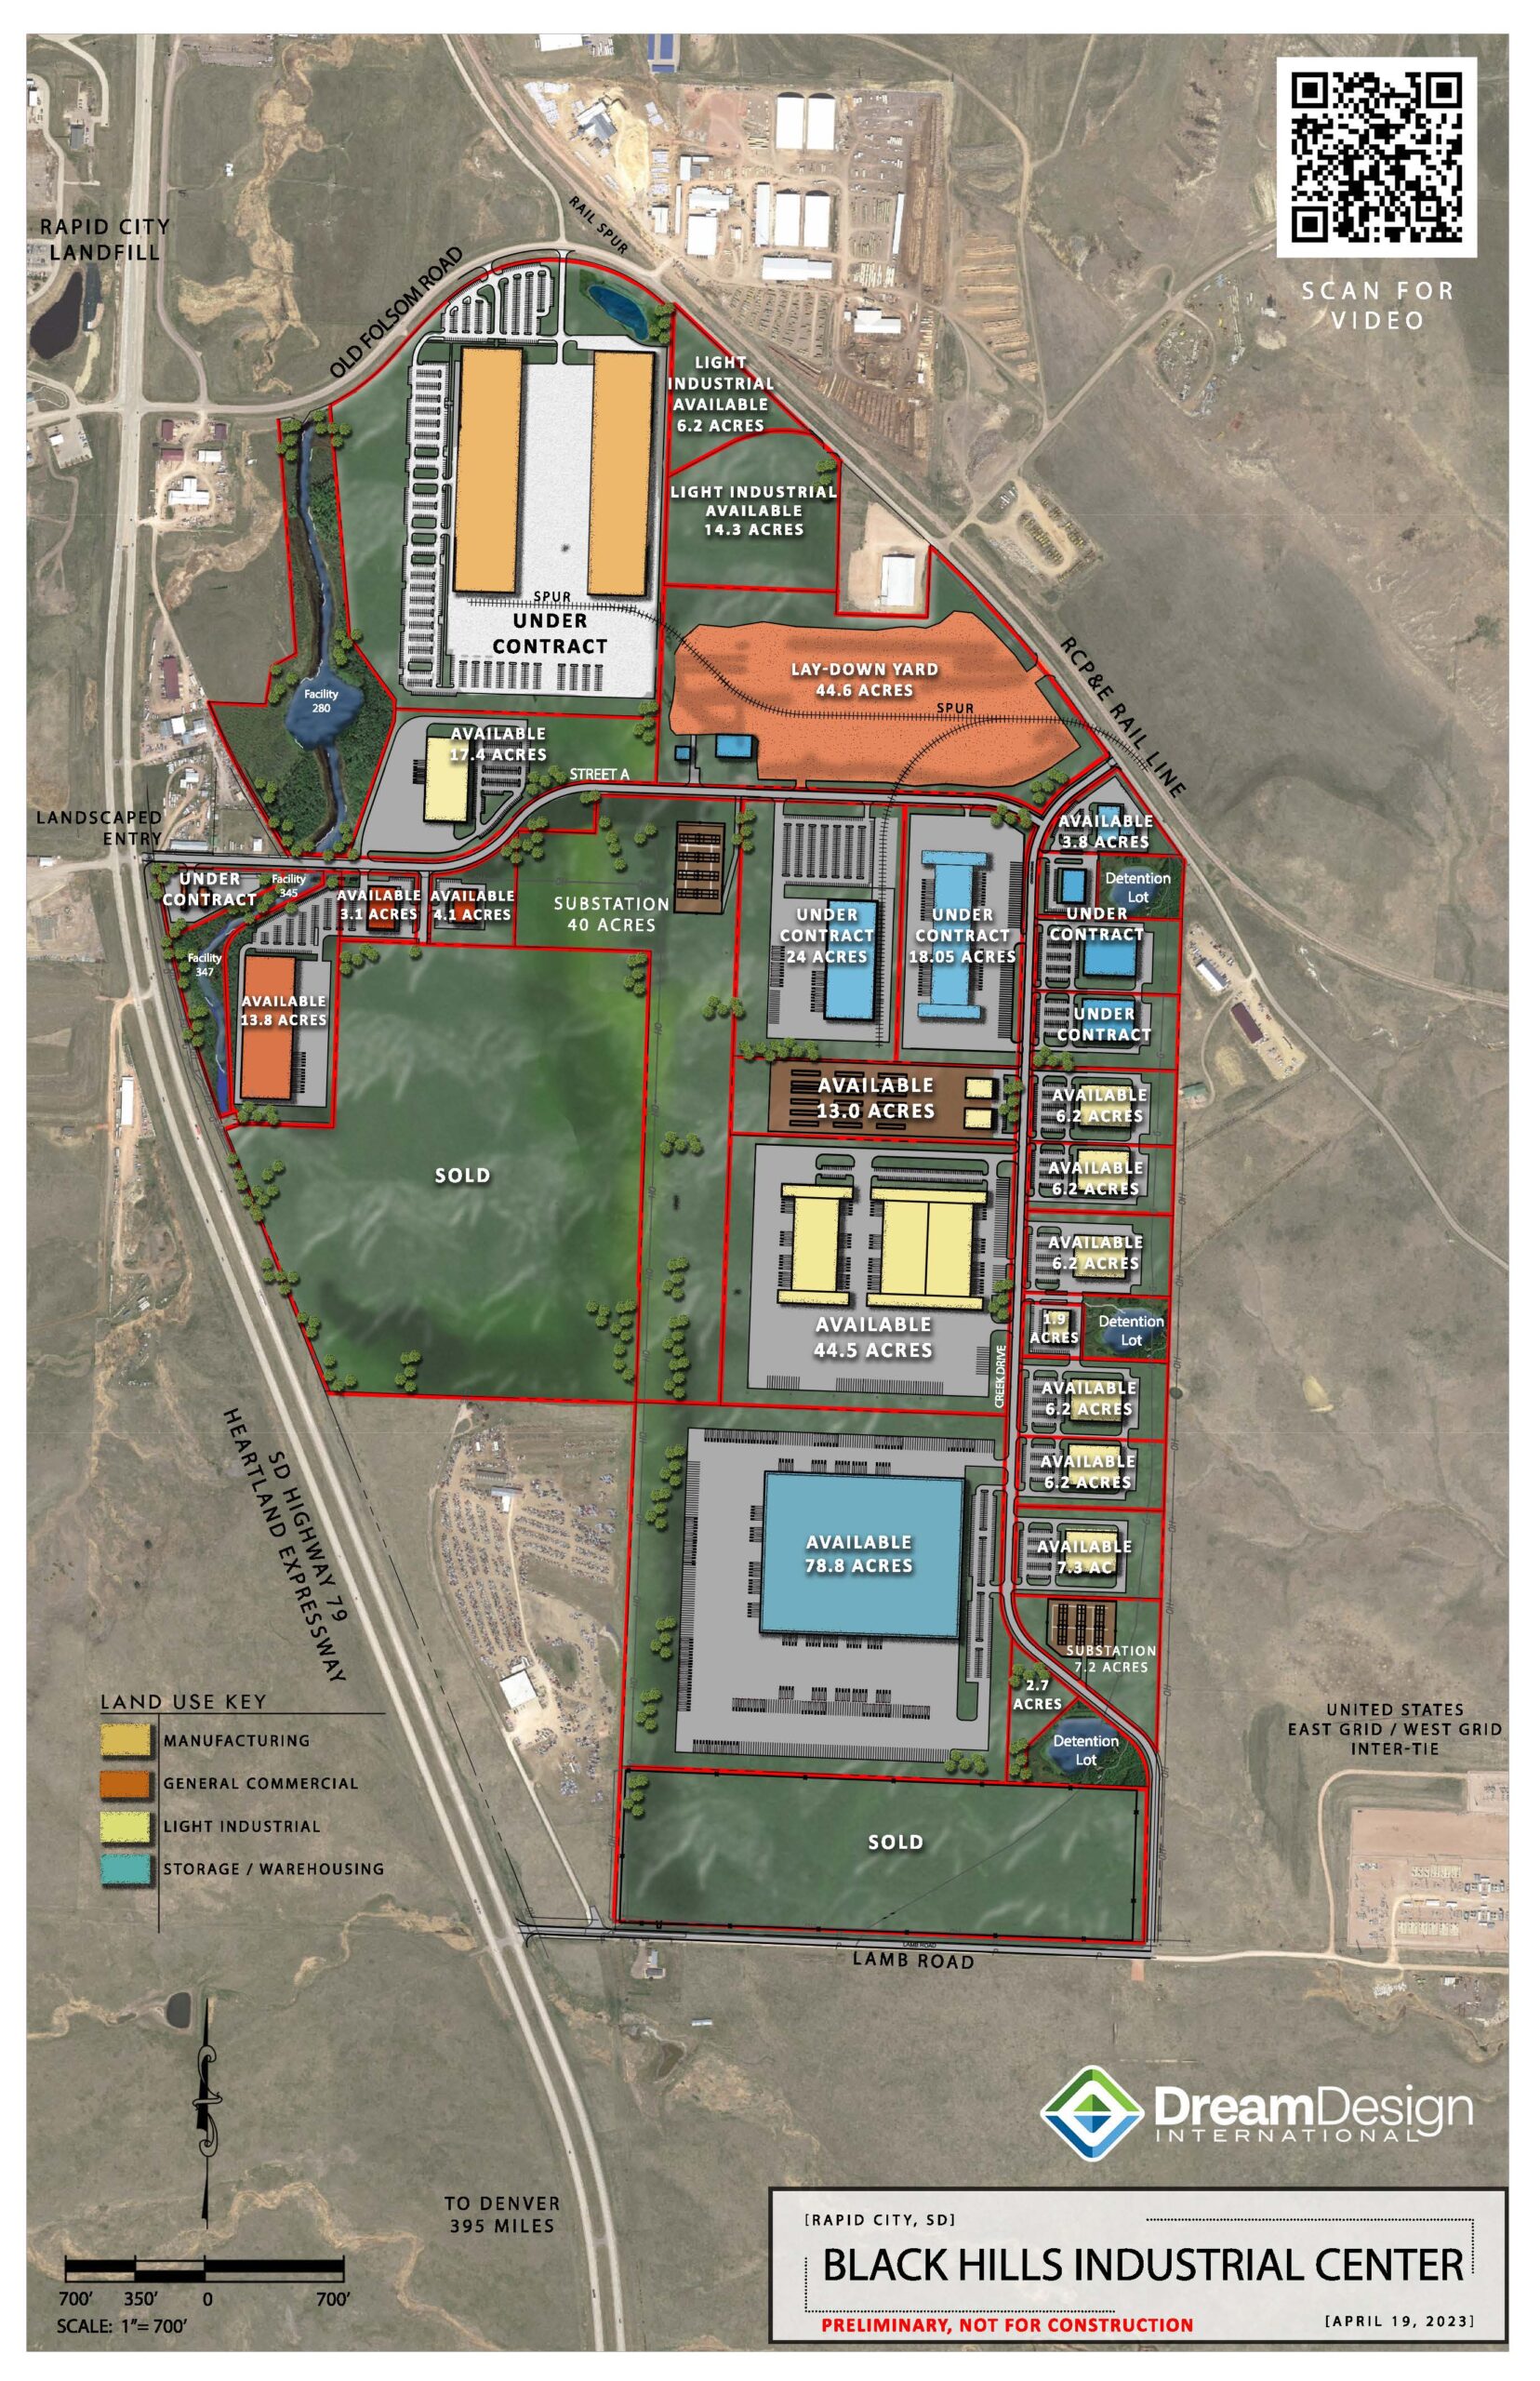 Black Hills Industrial Center master plan